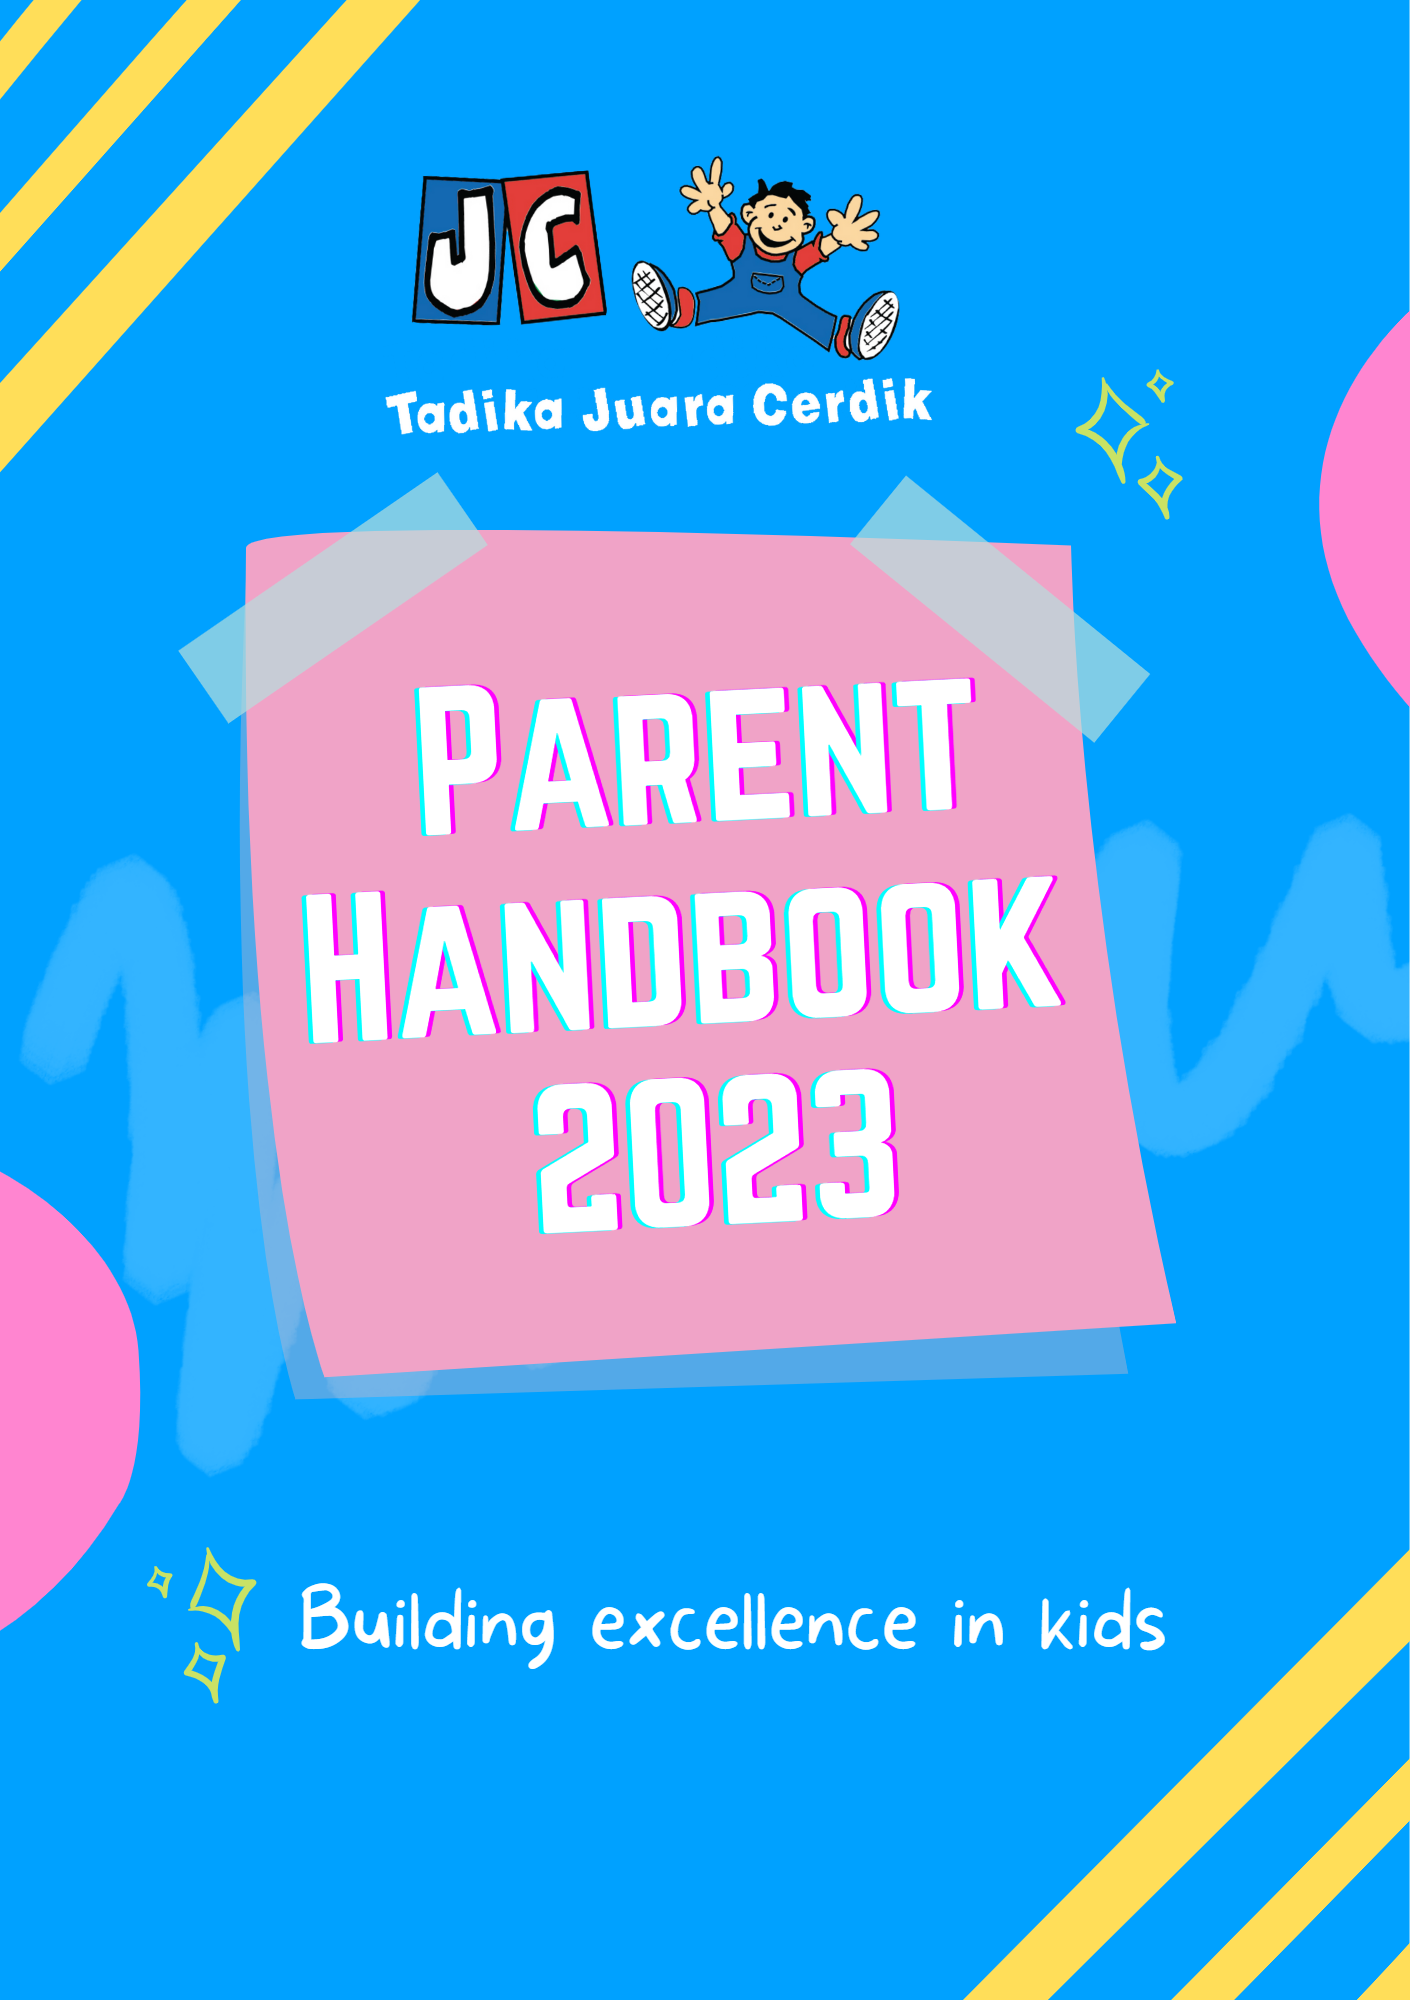 TJC Parent Handbook 2023